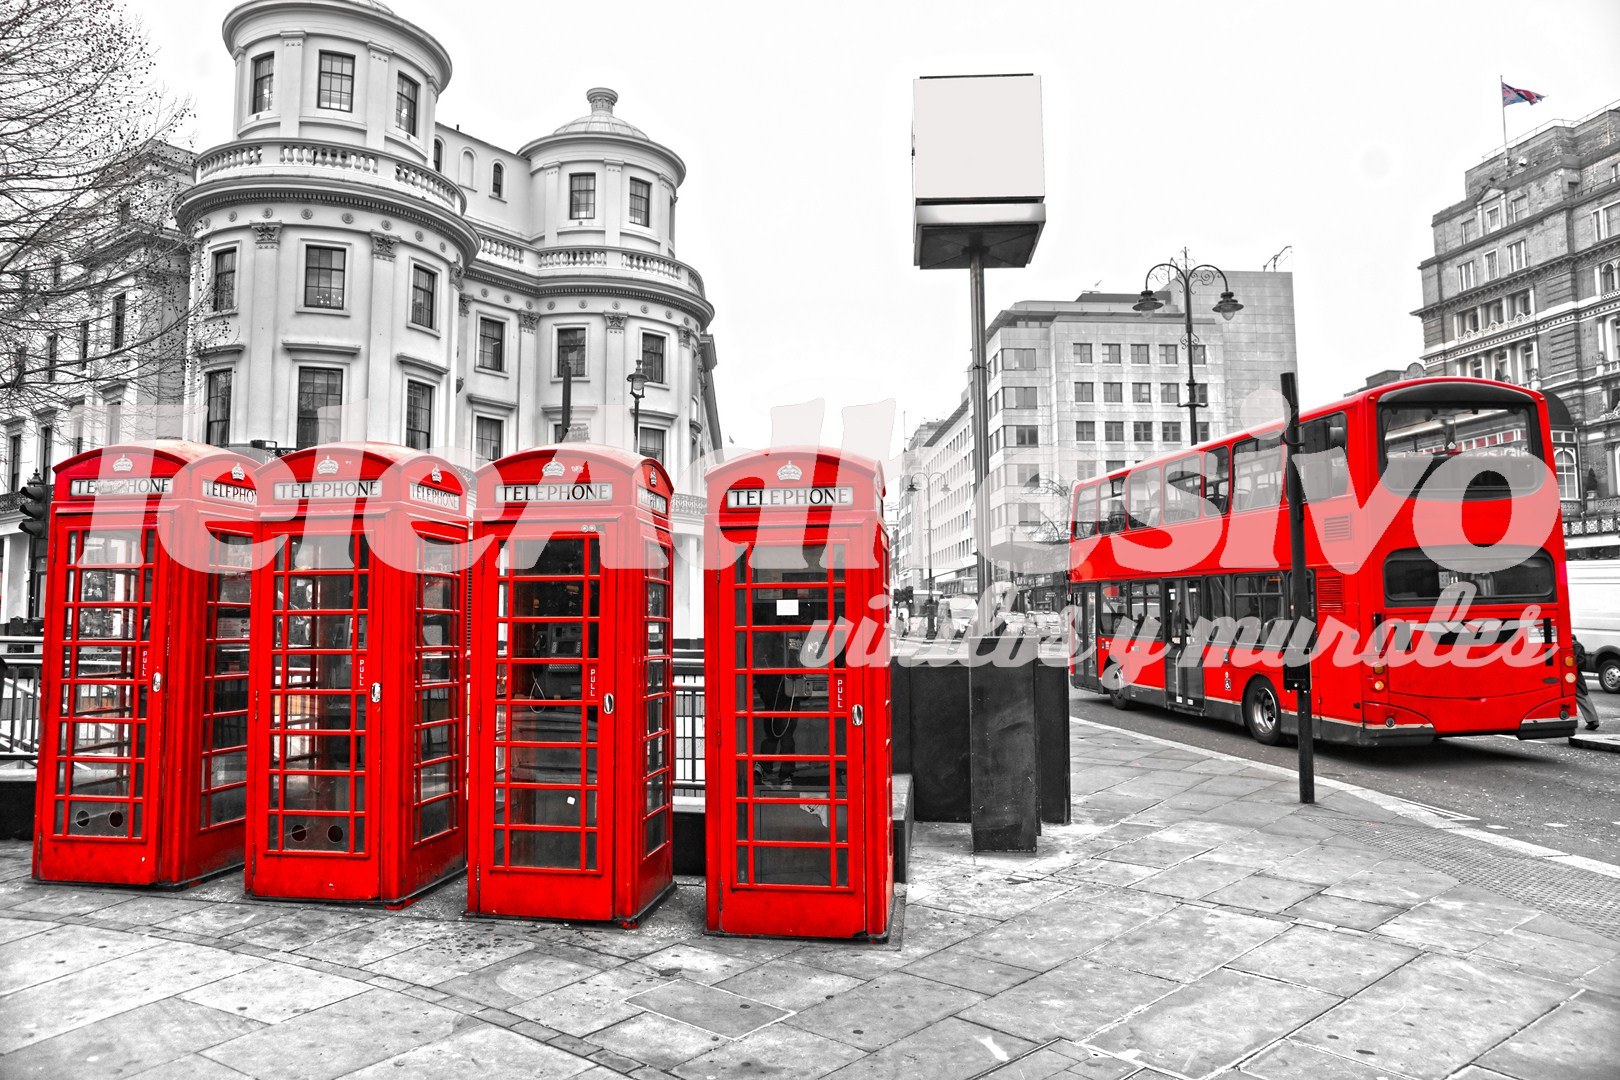 Fotomurales: Londres en Rojo